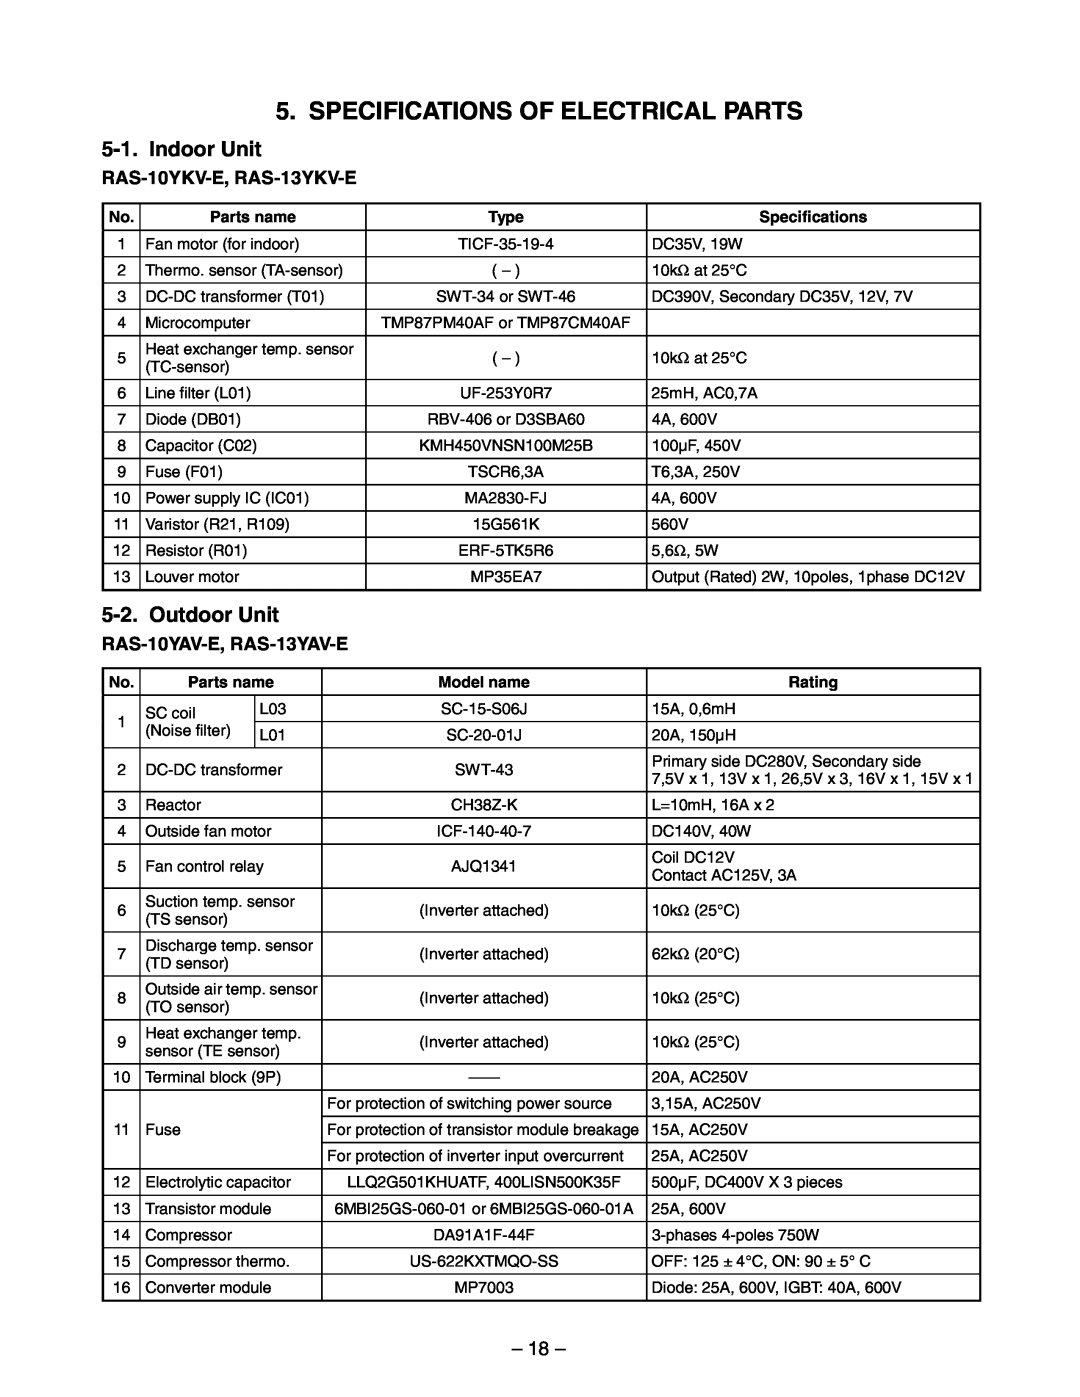 Toshiba RAS-10YAV-E, RAS-13YAV-E Specifications Of Electrical Parts, Indoor Unit, Outdoor Unit, RAS-10YKV-E, RAS-13YKV-E 